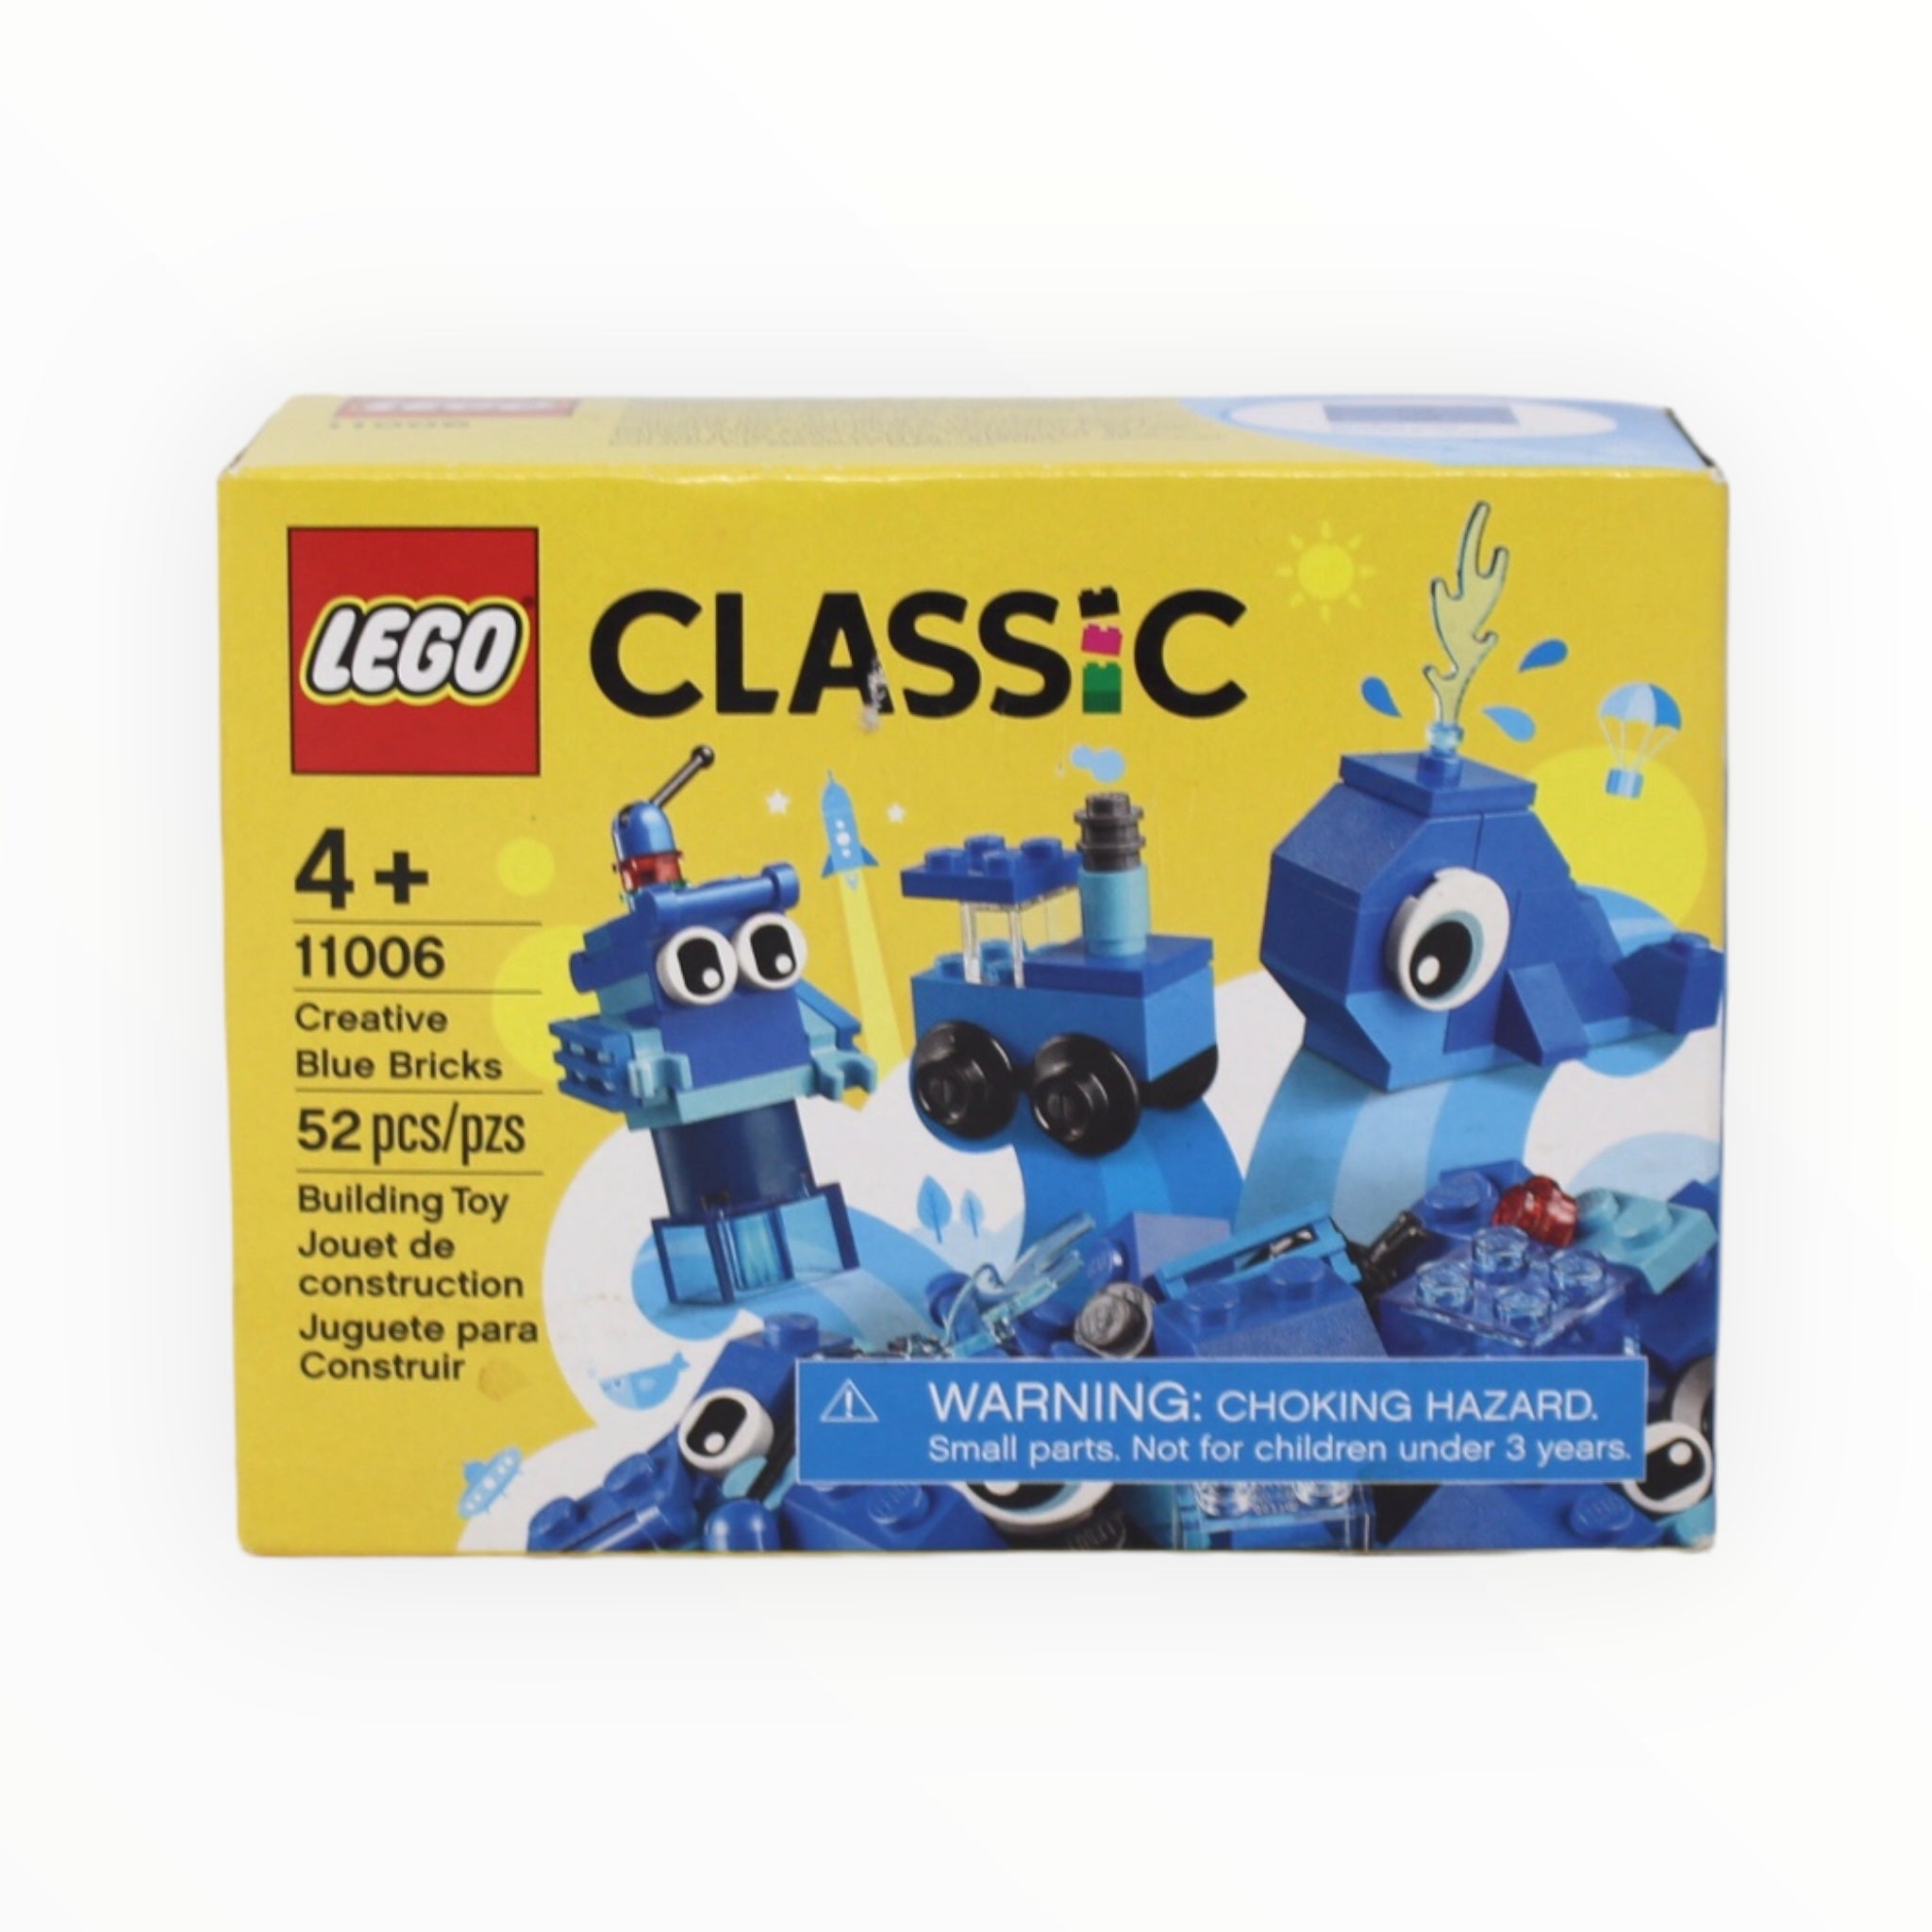 Retired Set 11006 Classic Creative Blue Bricks